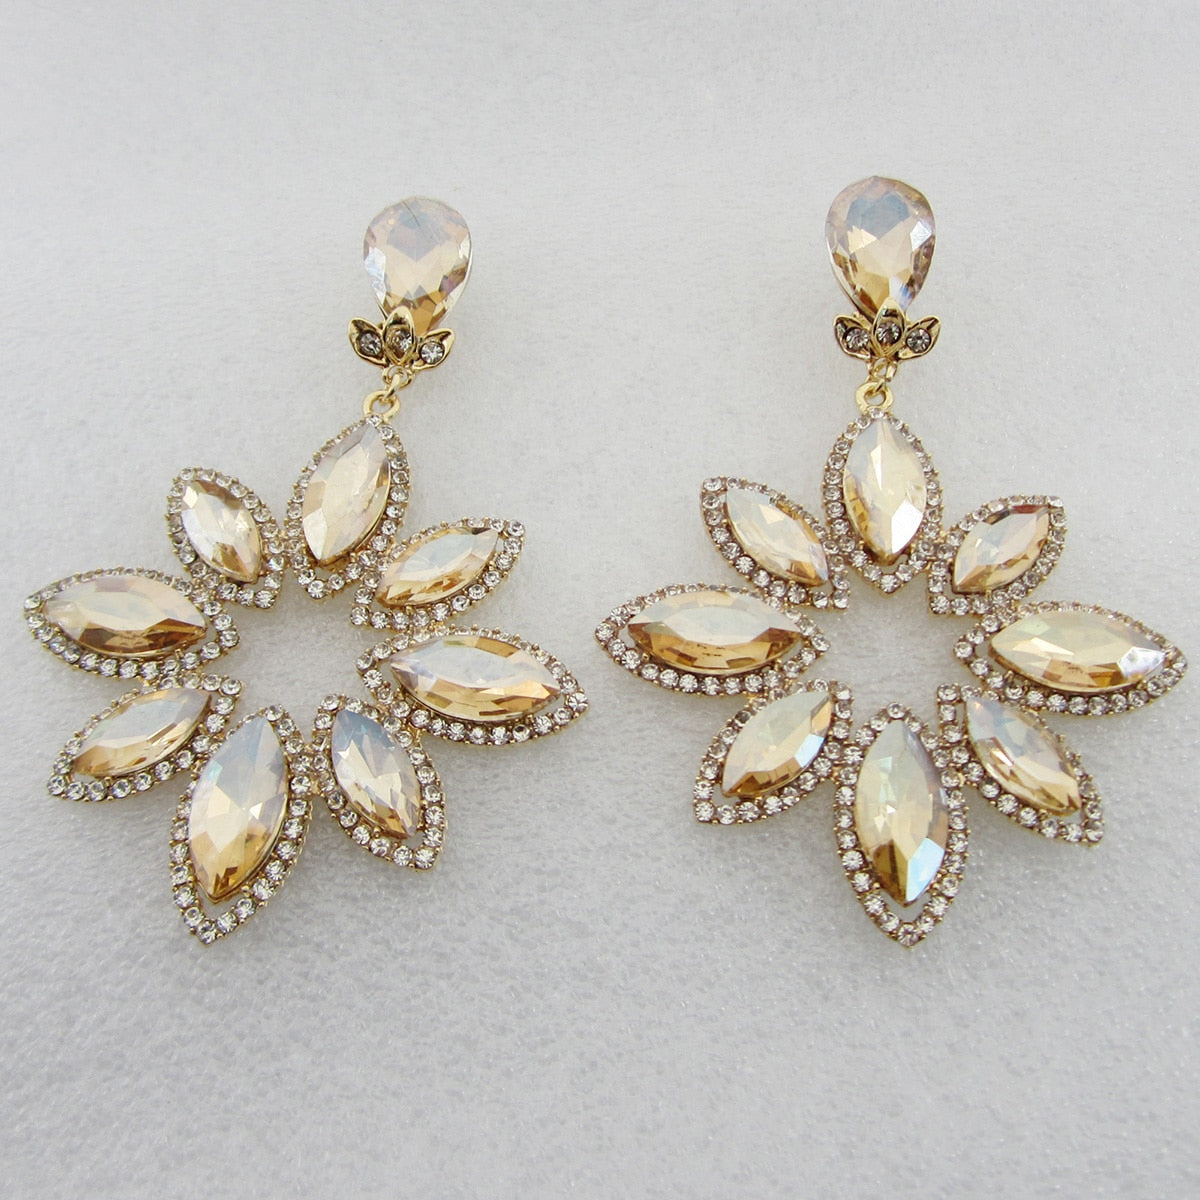 Novelly Crystal Big Dangle Earrings For Women Party Jewlery Pendientes Rhinestone Statement Earrings